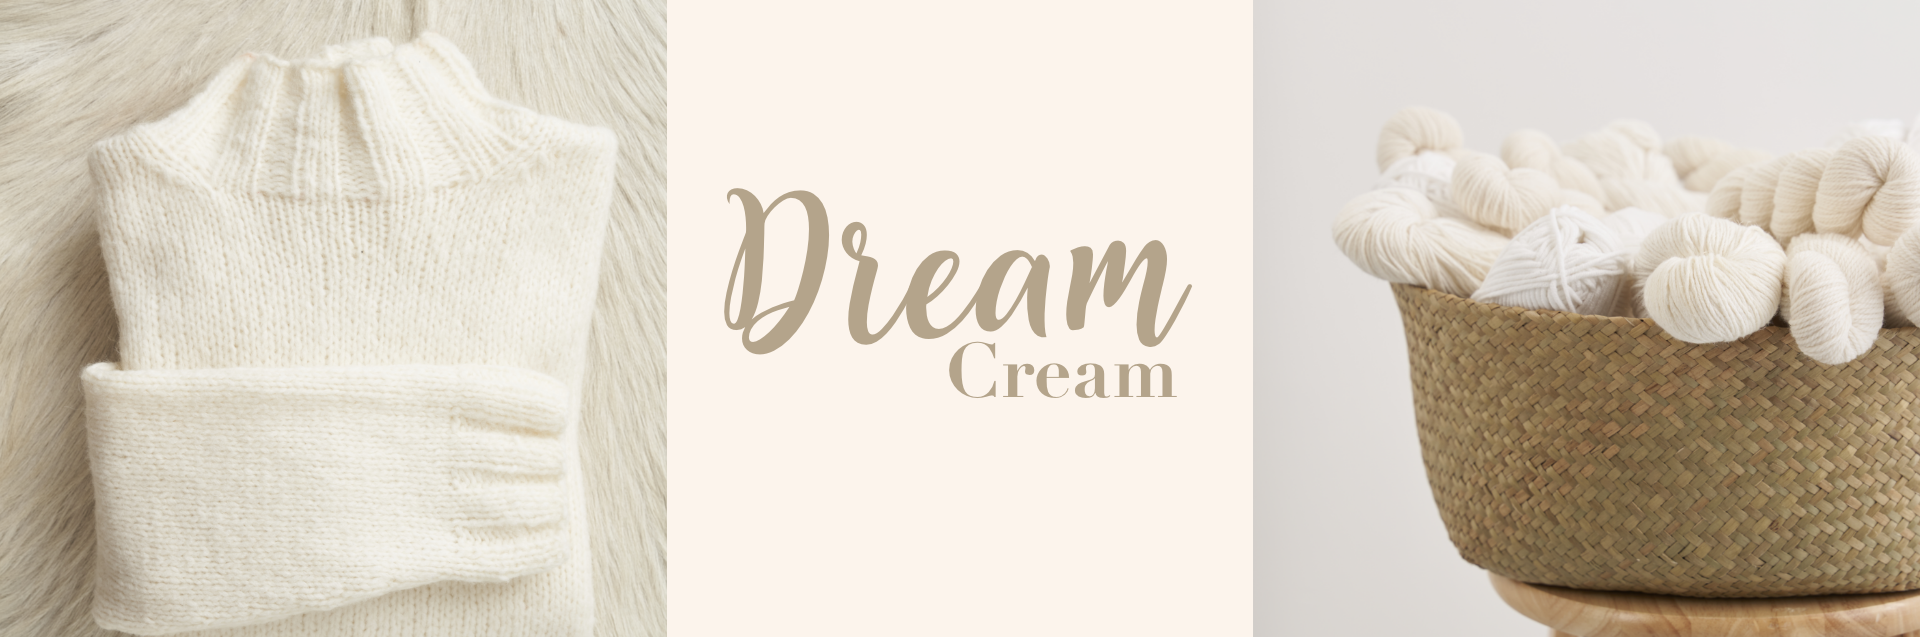 Dream Cream Banner